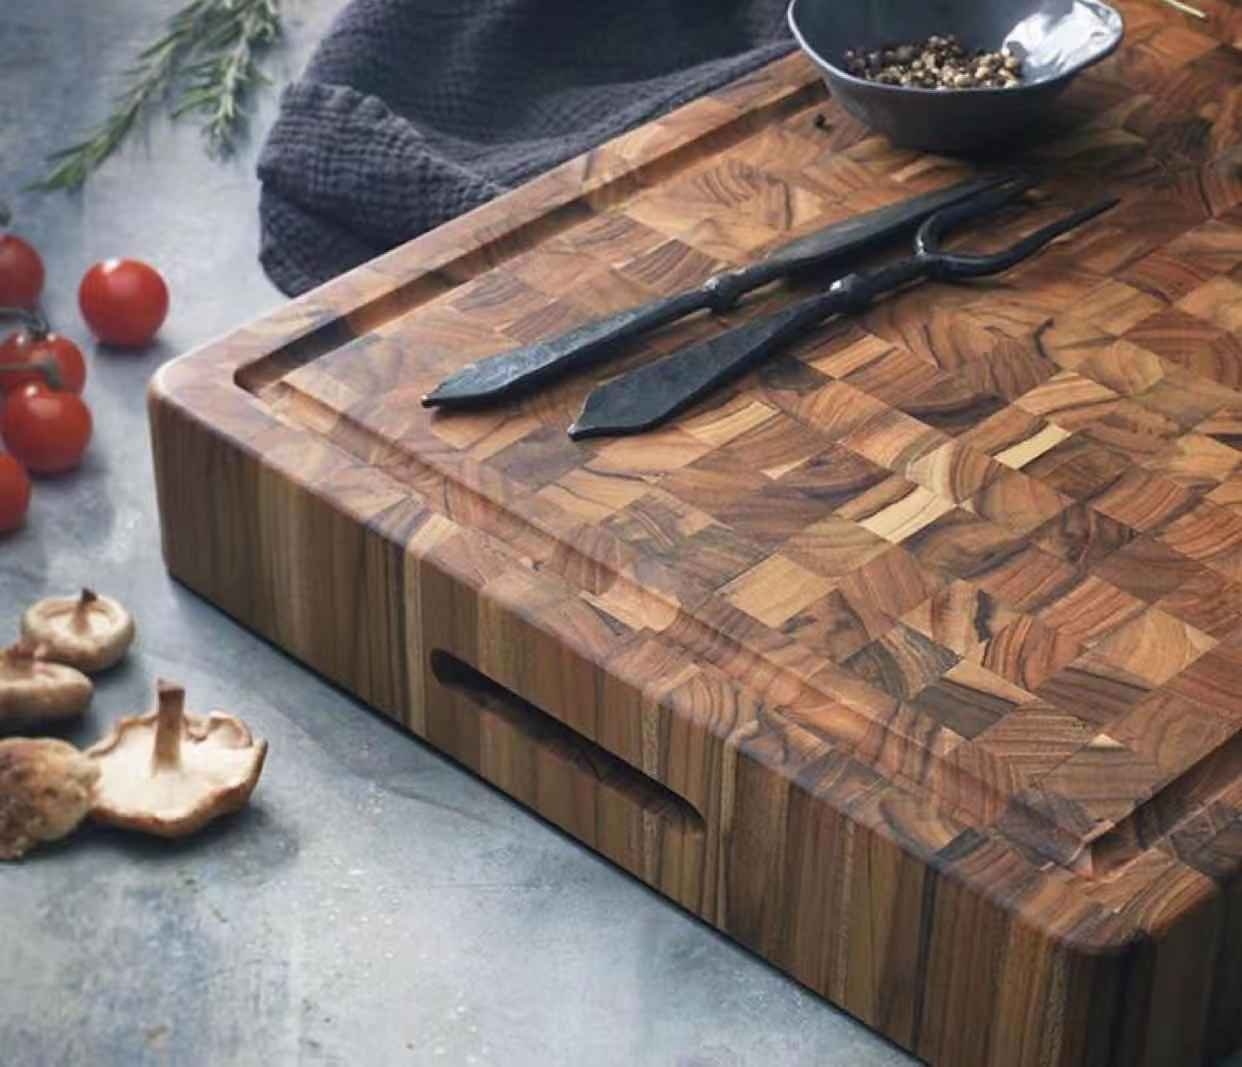 Teak end grain cutting board with inner handle